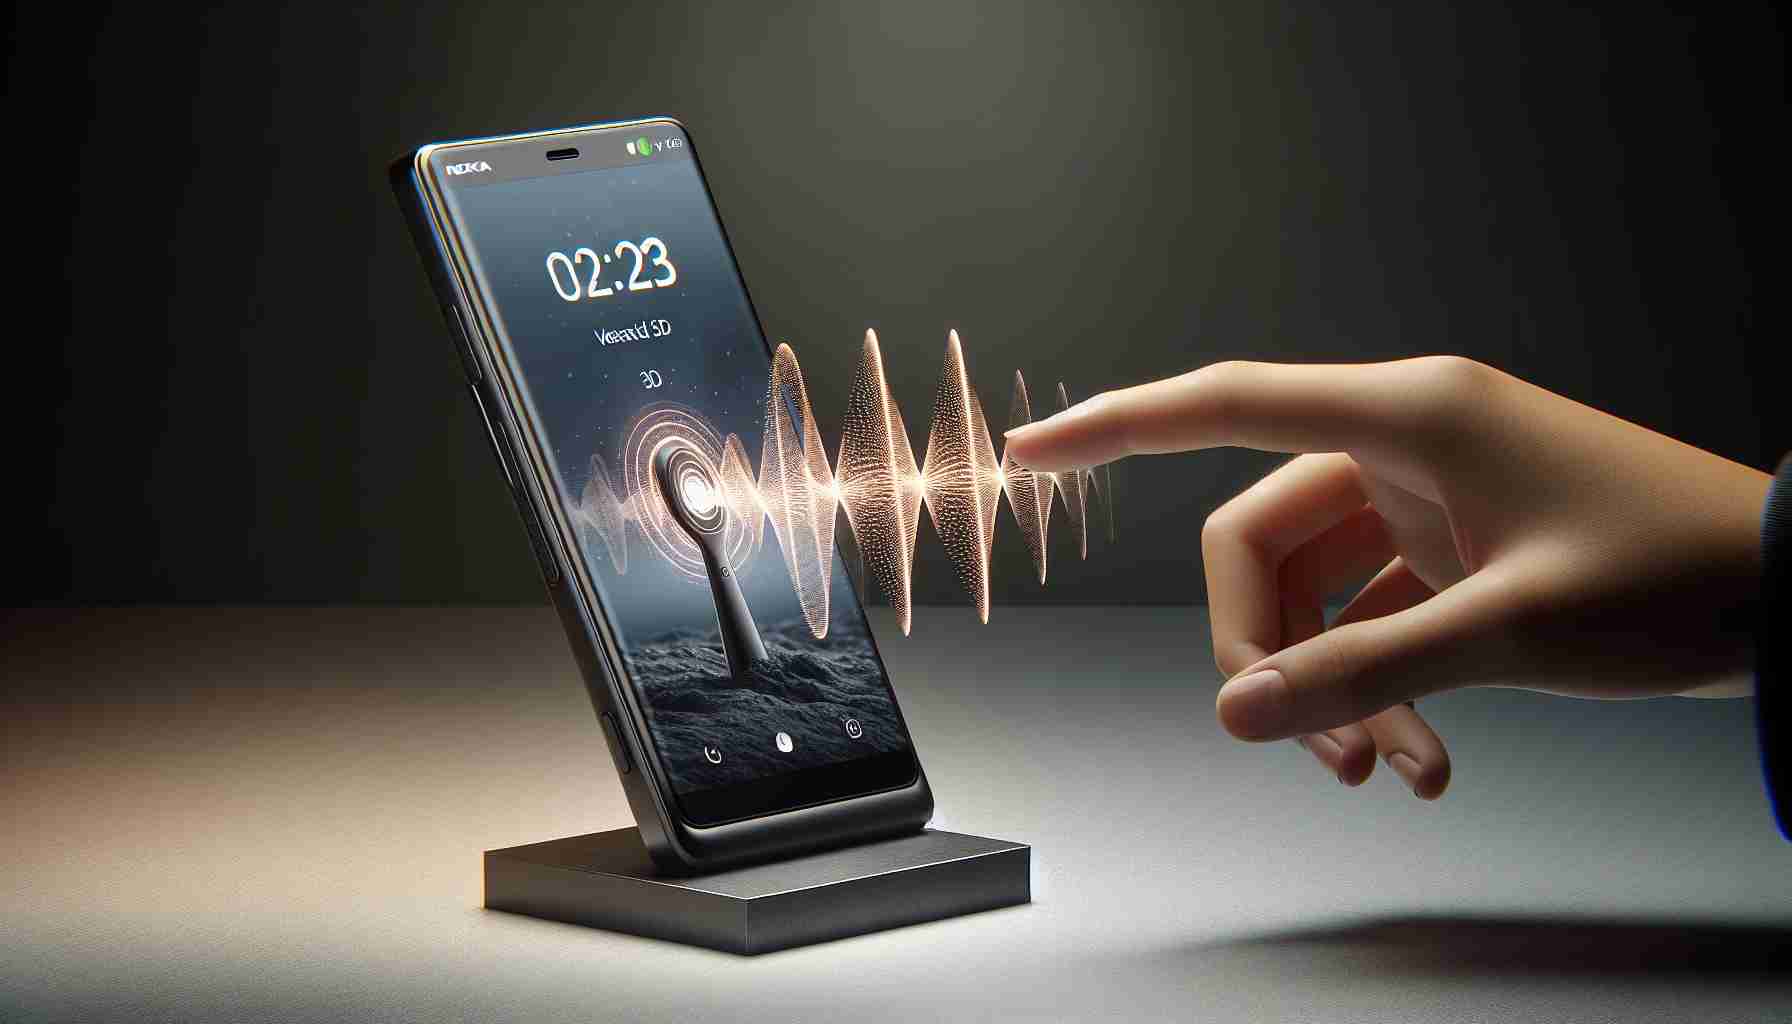 Nokia Pioneers Revolutionary 3D Audio in Phone Calls